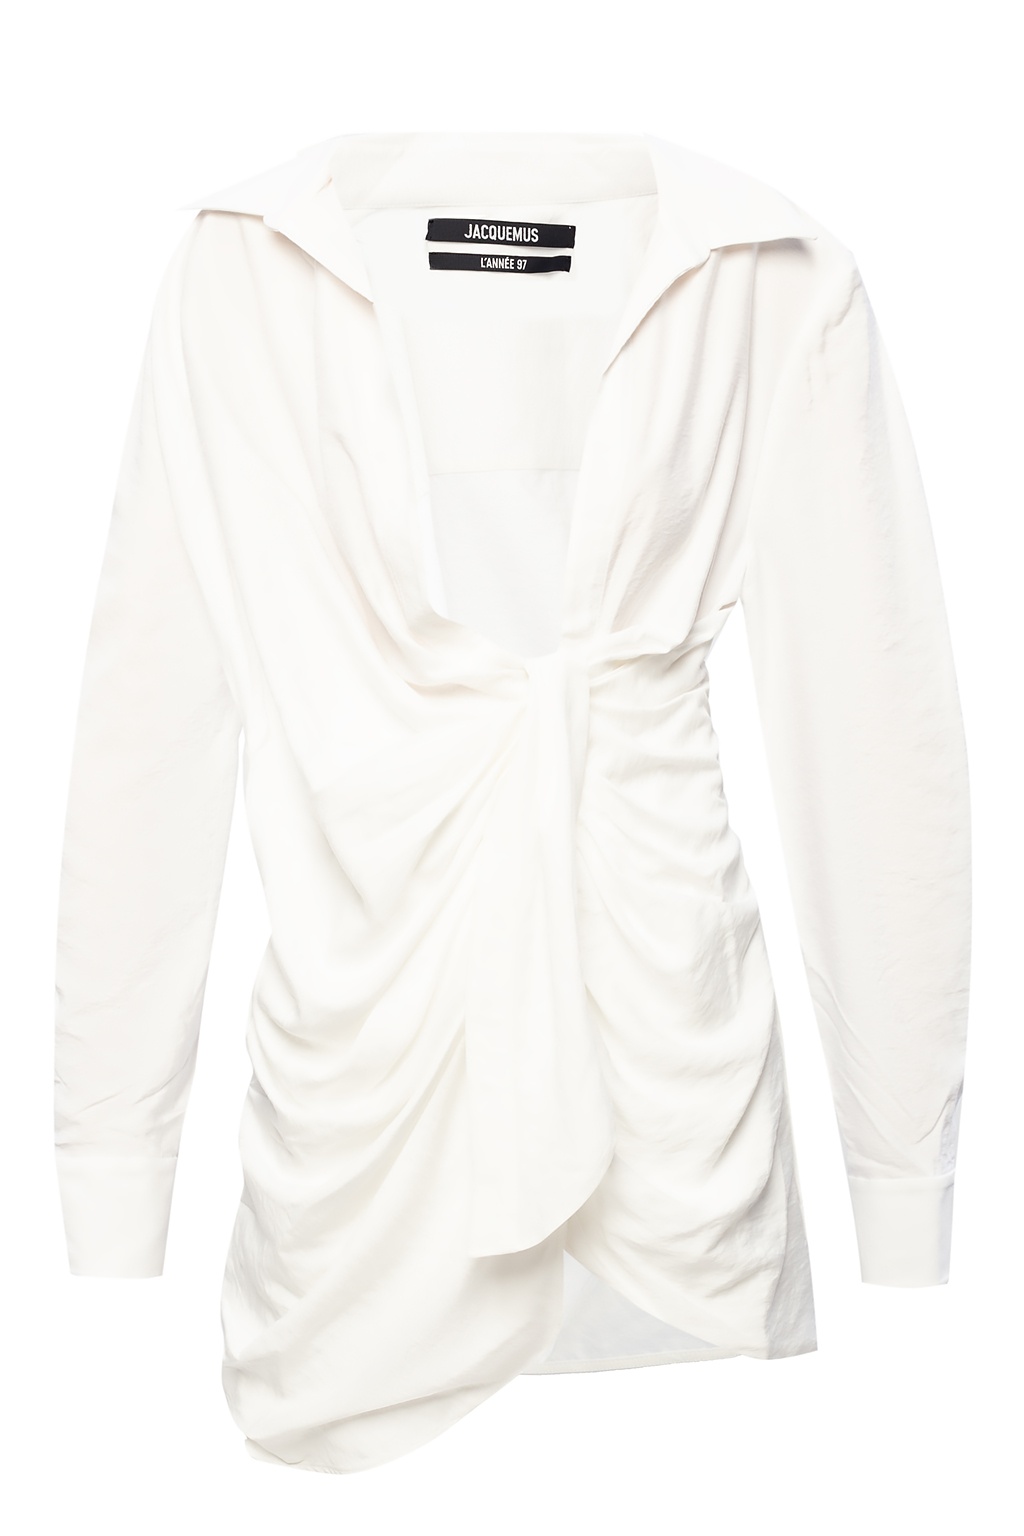 jacquemus white shirt dress